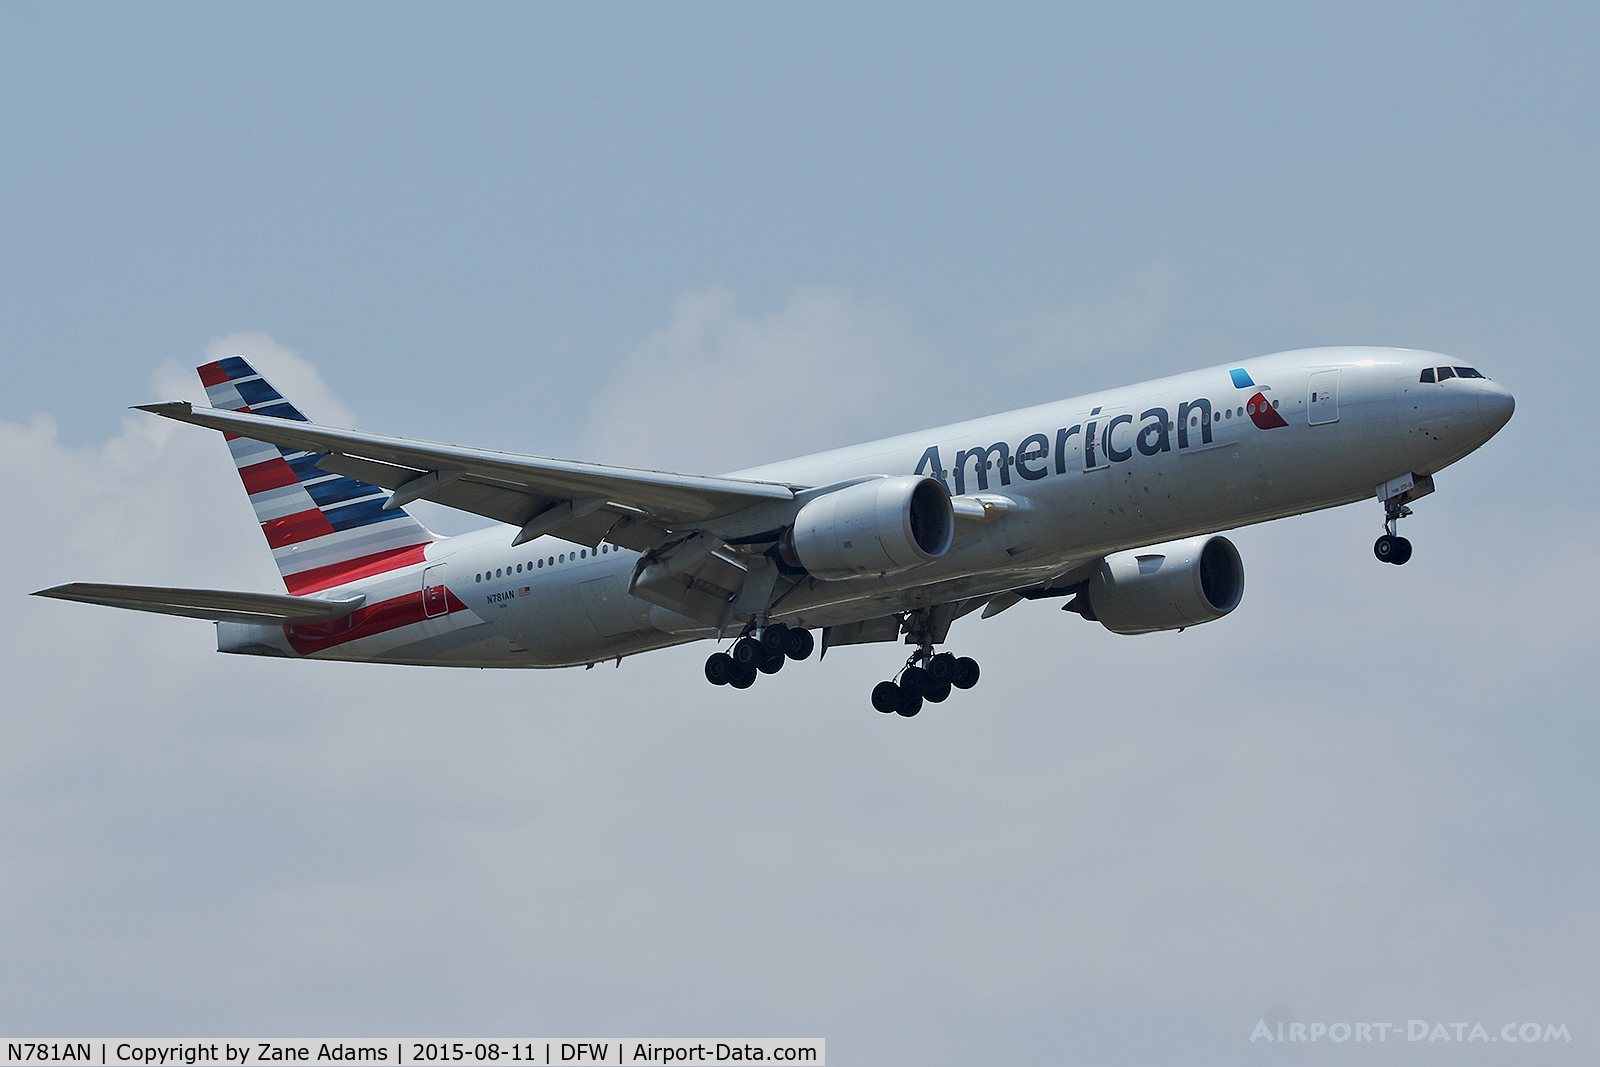 N781AN, 2000 Boeing 777-223 C/N 29586, American Airlines arriving at DFW Airport